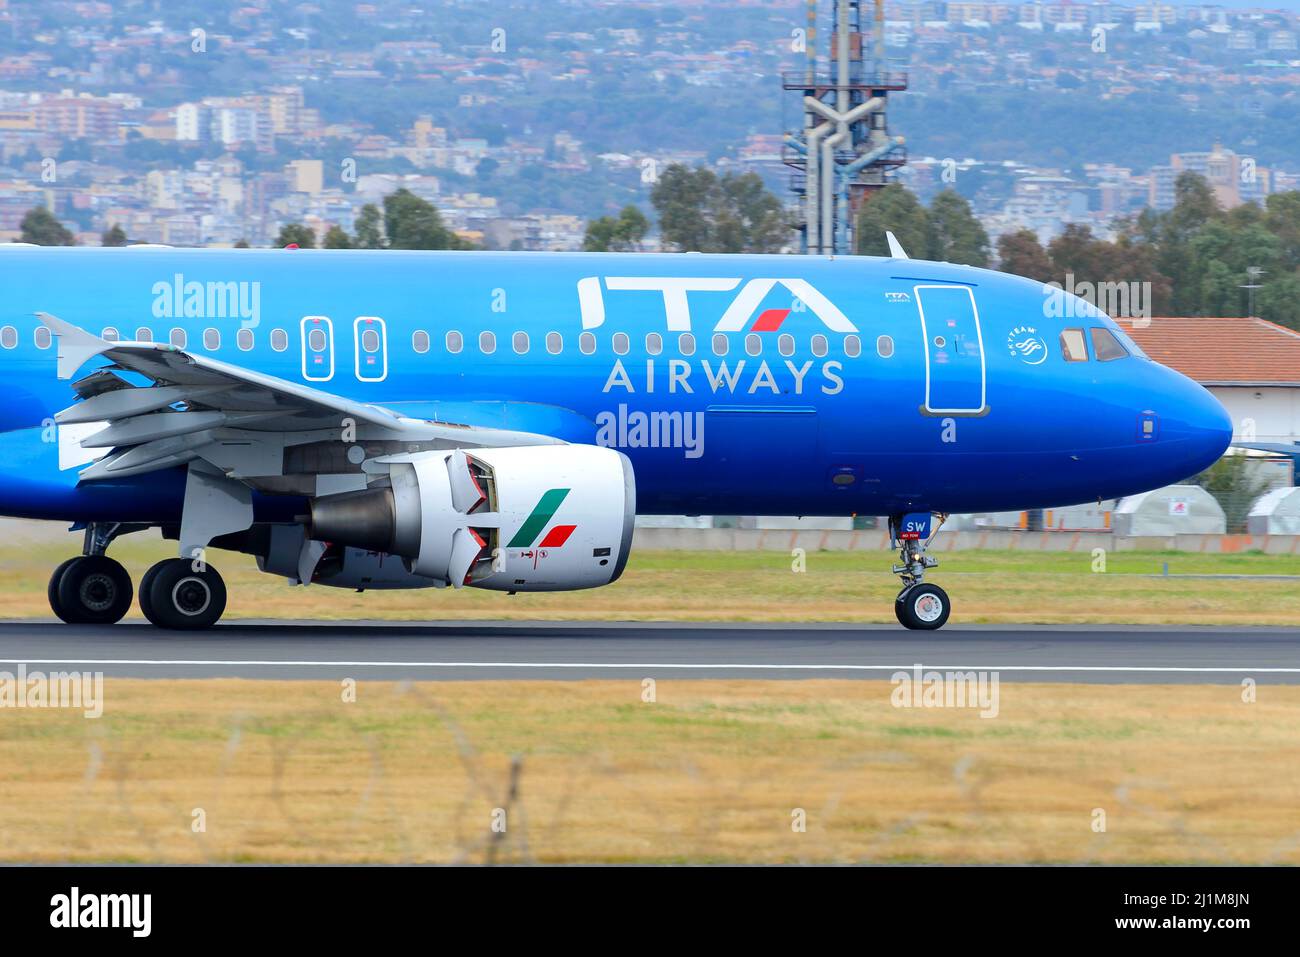 ITA Airways Airbus A320 aircraft landing at Catania Airport. New national airline of Italy. Airplane of ITA Airways, Italia Transporto Aereo. Stock Photo